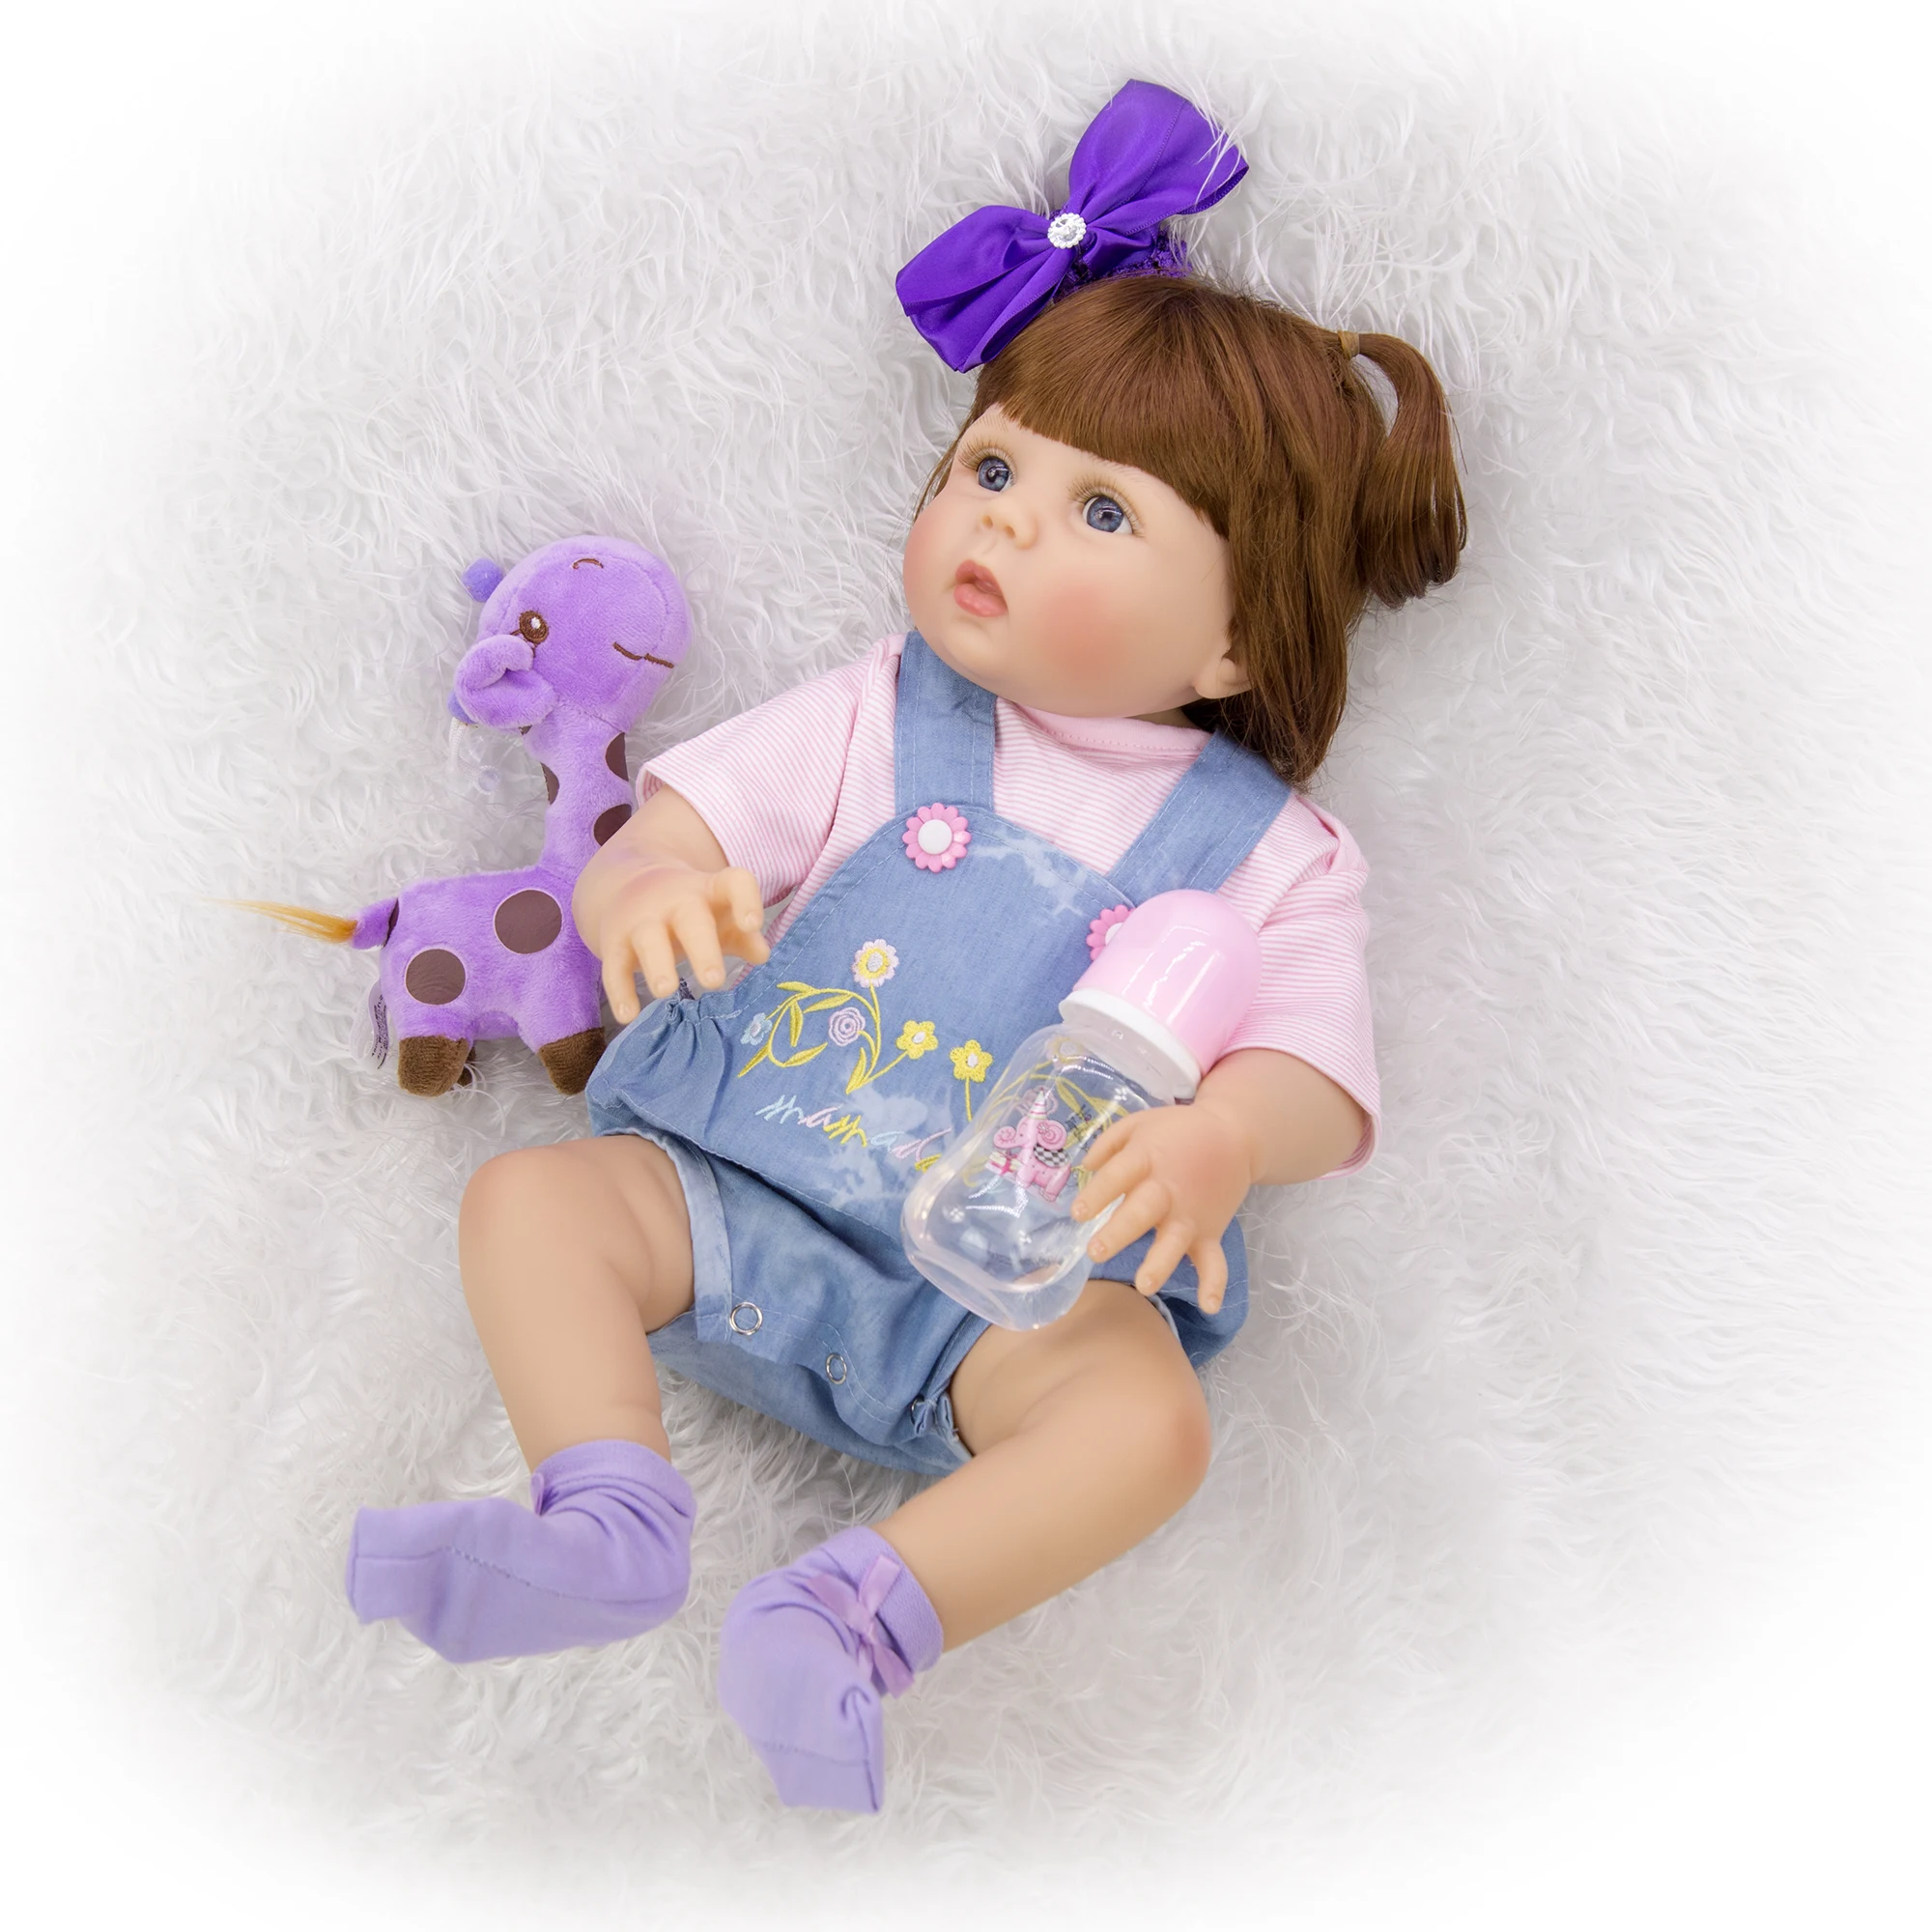 

Lifelike 23'' 57cm Reborn Boneca Doll Full Silicone Vinyl Body Lovely bebe Newborn Doll Toy For Girl Birthday Christmas Present